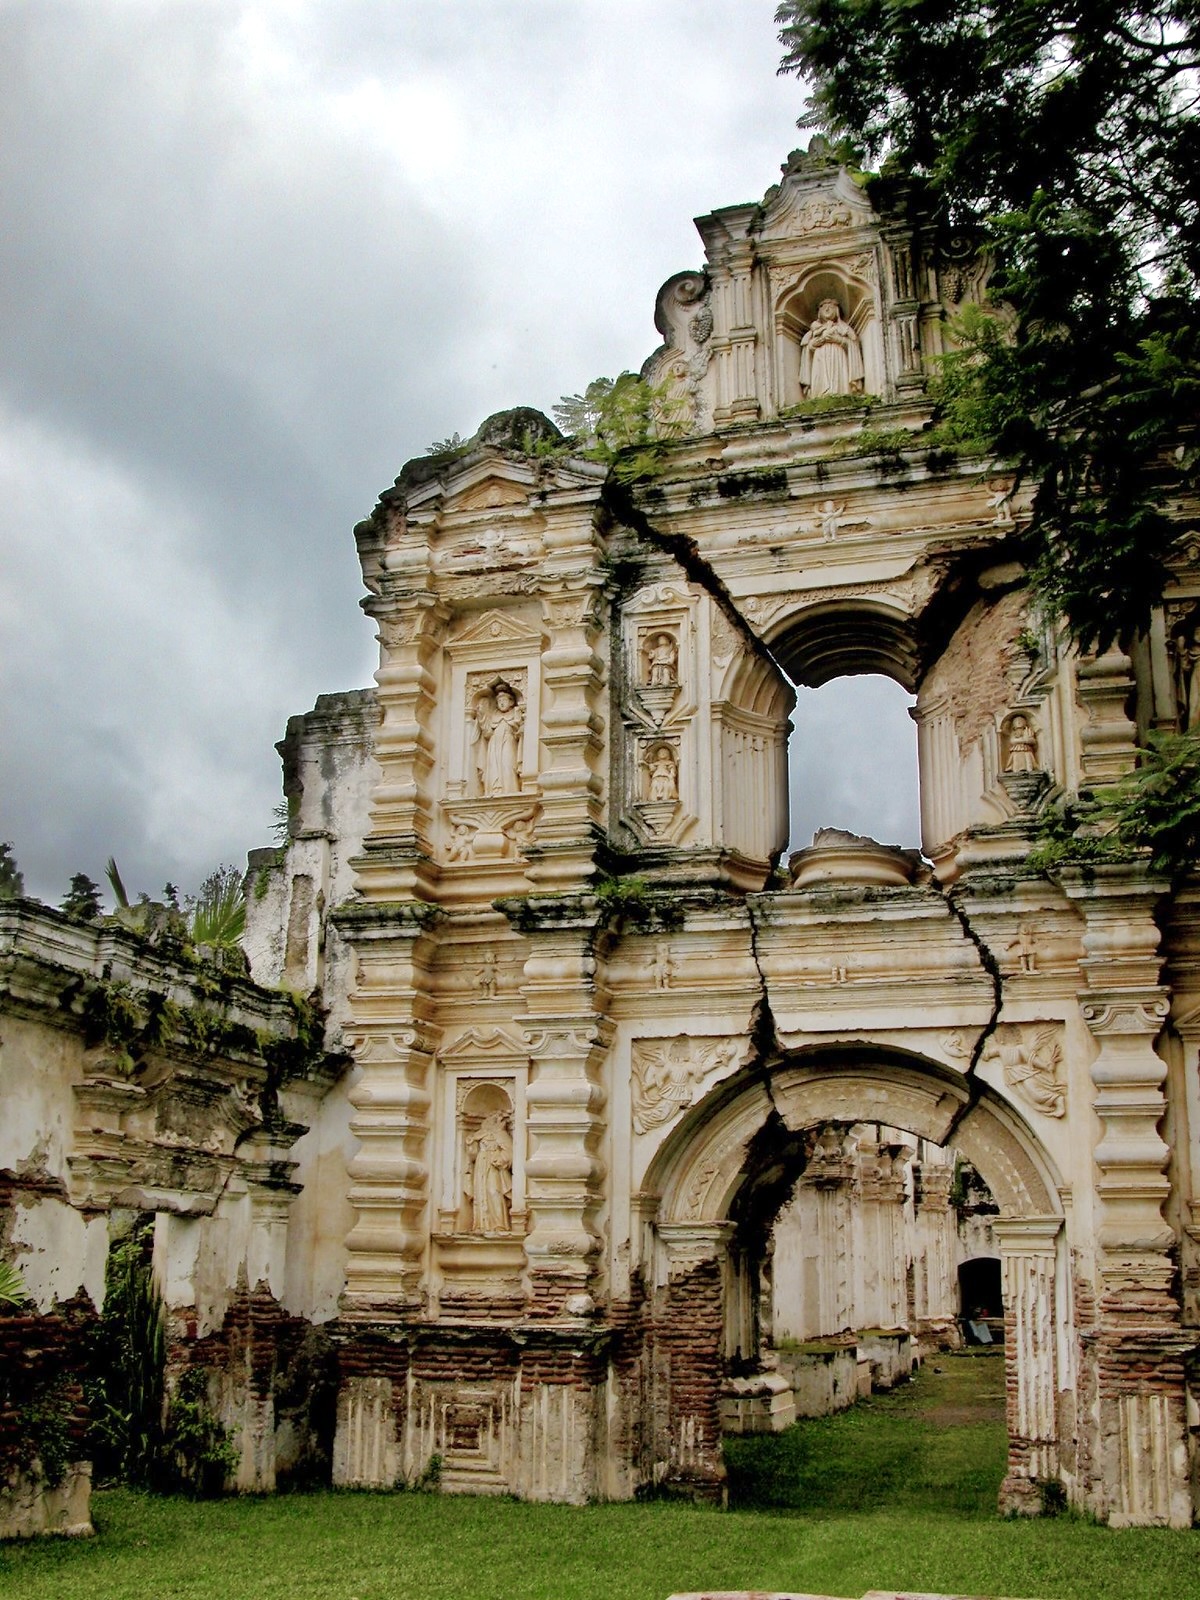 Santa Rosa Church ruins in Antigua Guatemala. Photo by youngrobv on Flickr. Creative Commons License.